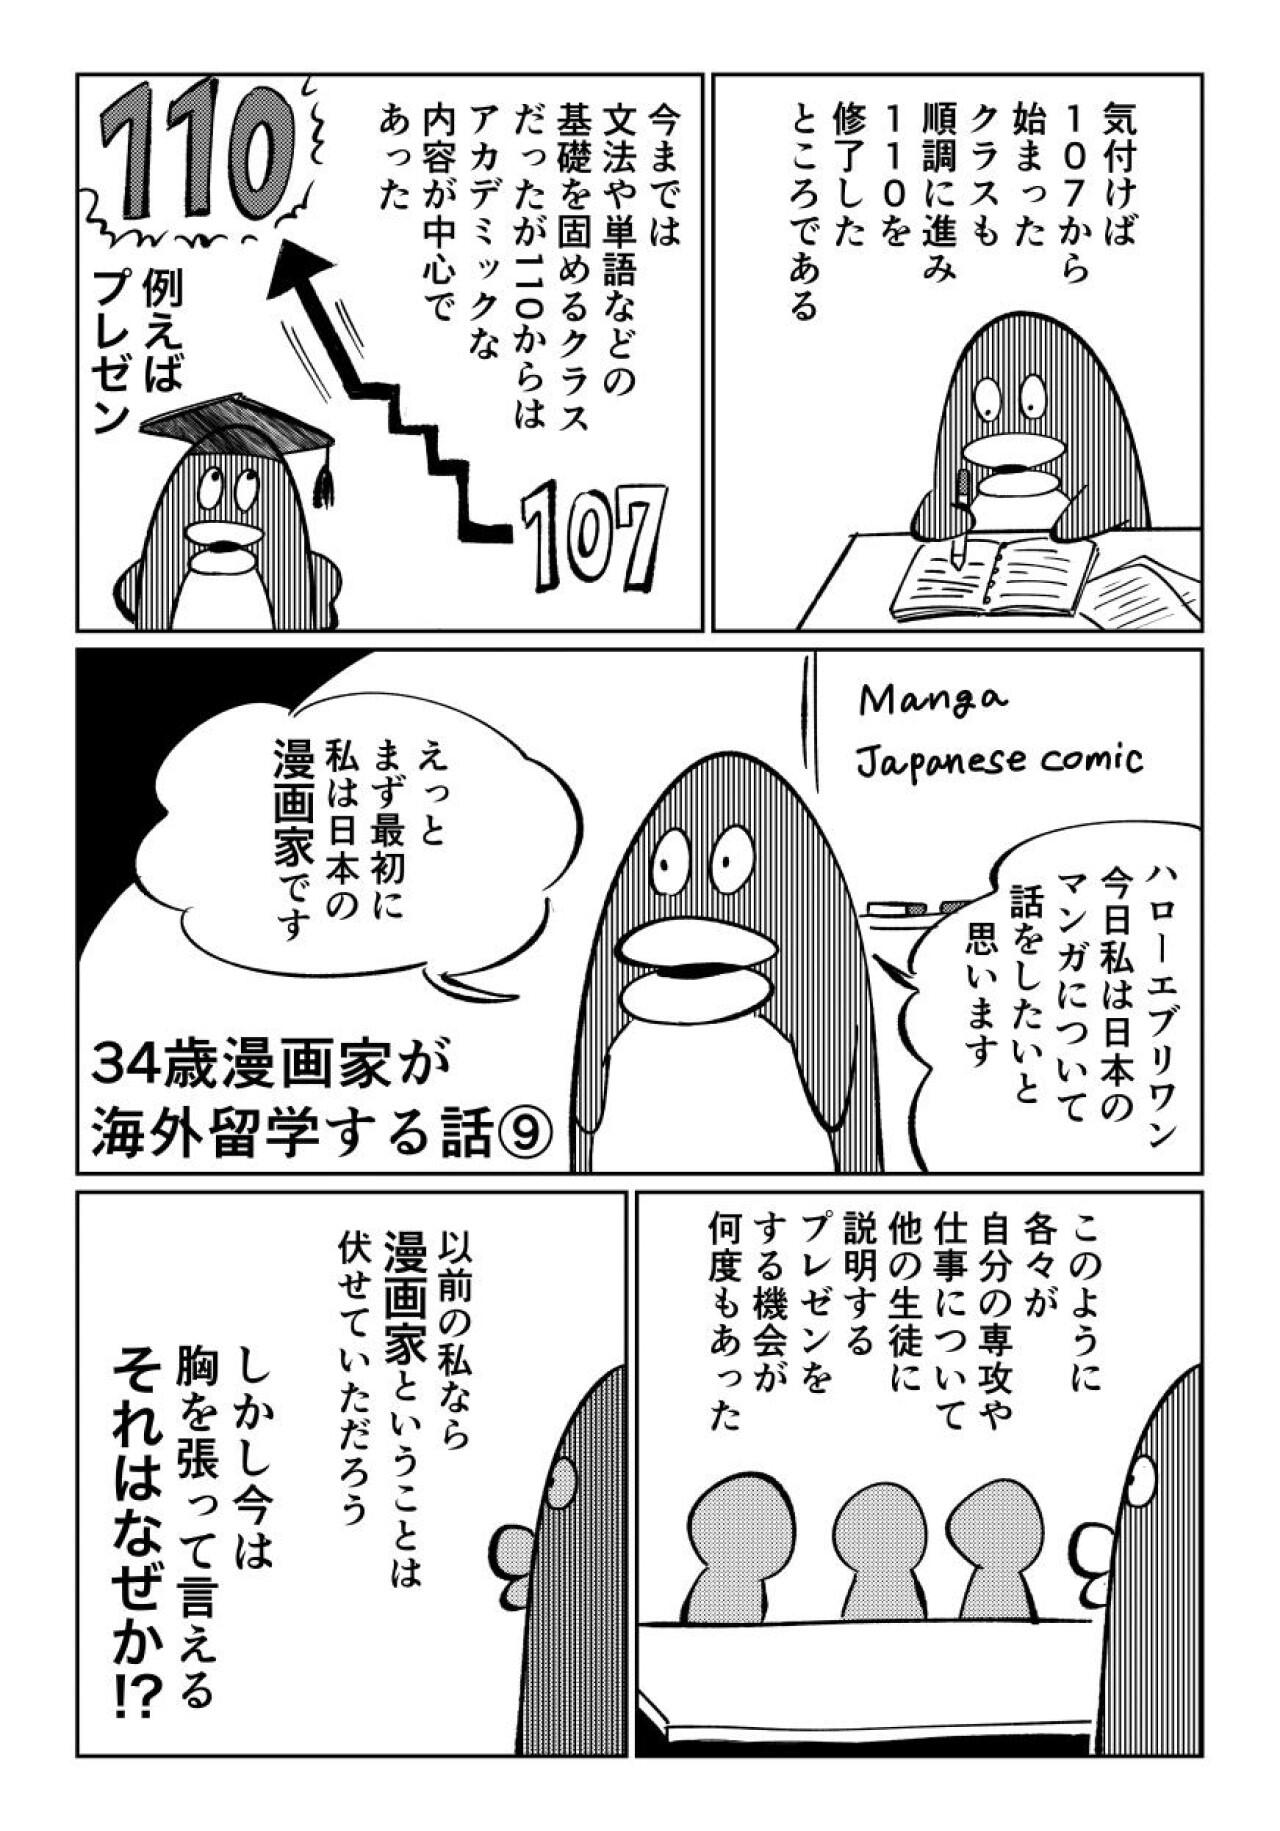 https://www.ryugaku.co.jp/column/images/34sai9_1_1280.jpg